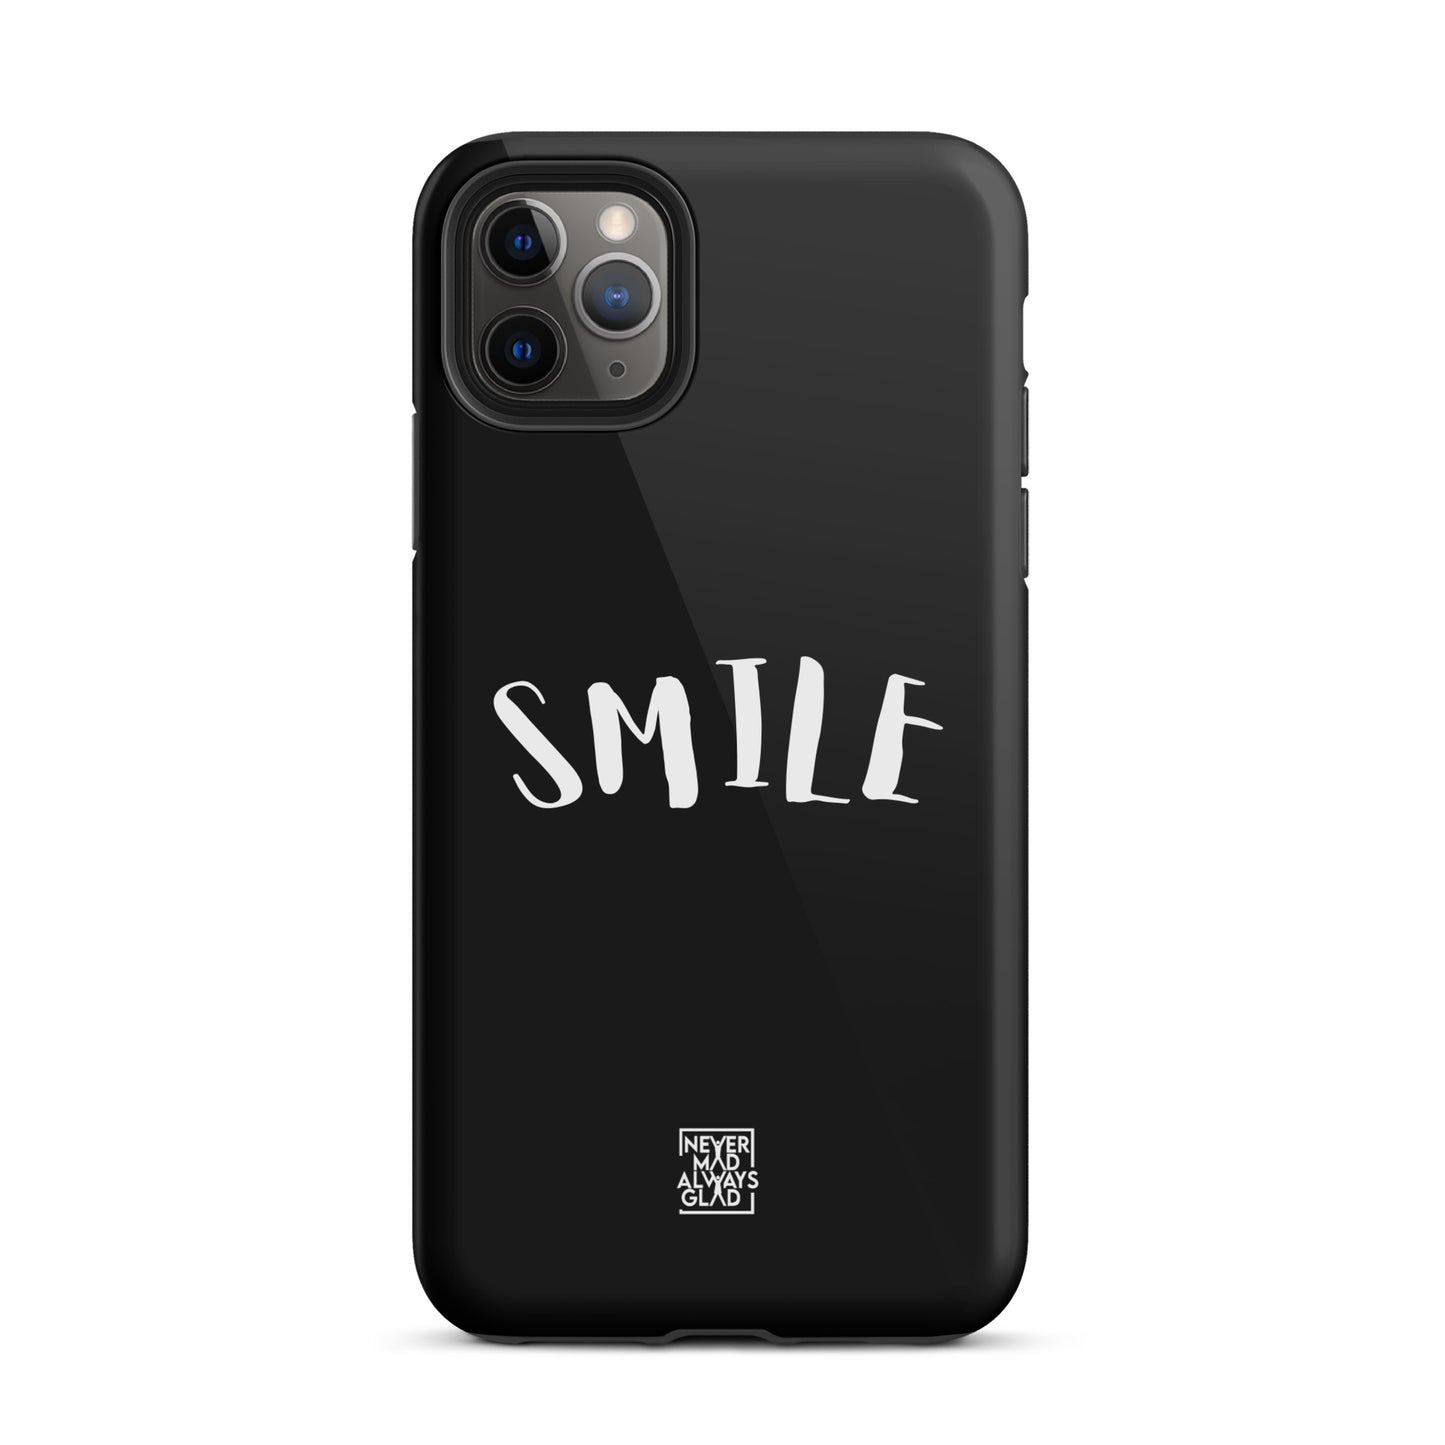 NMAG SMILE BLACK Tough iPhone case